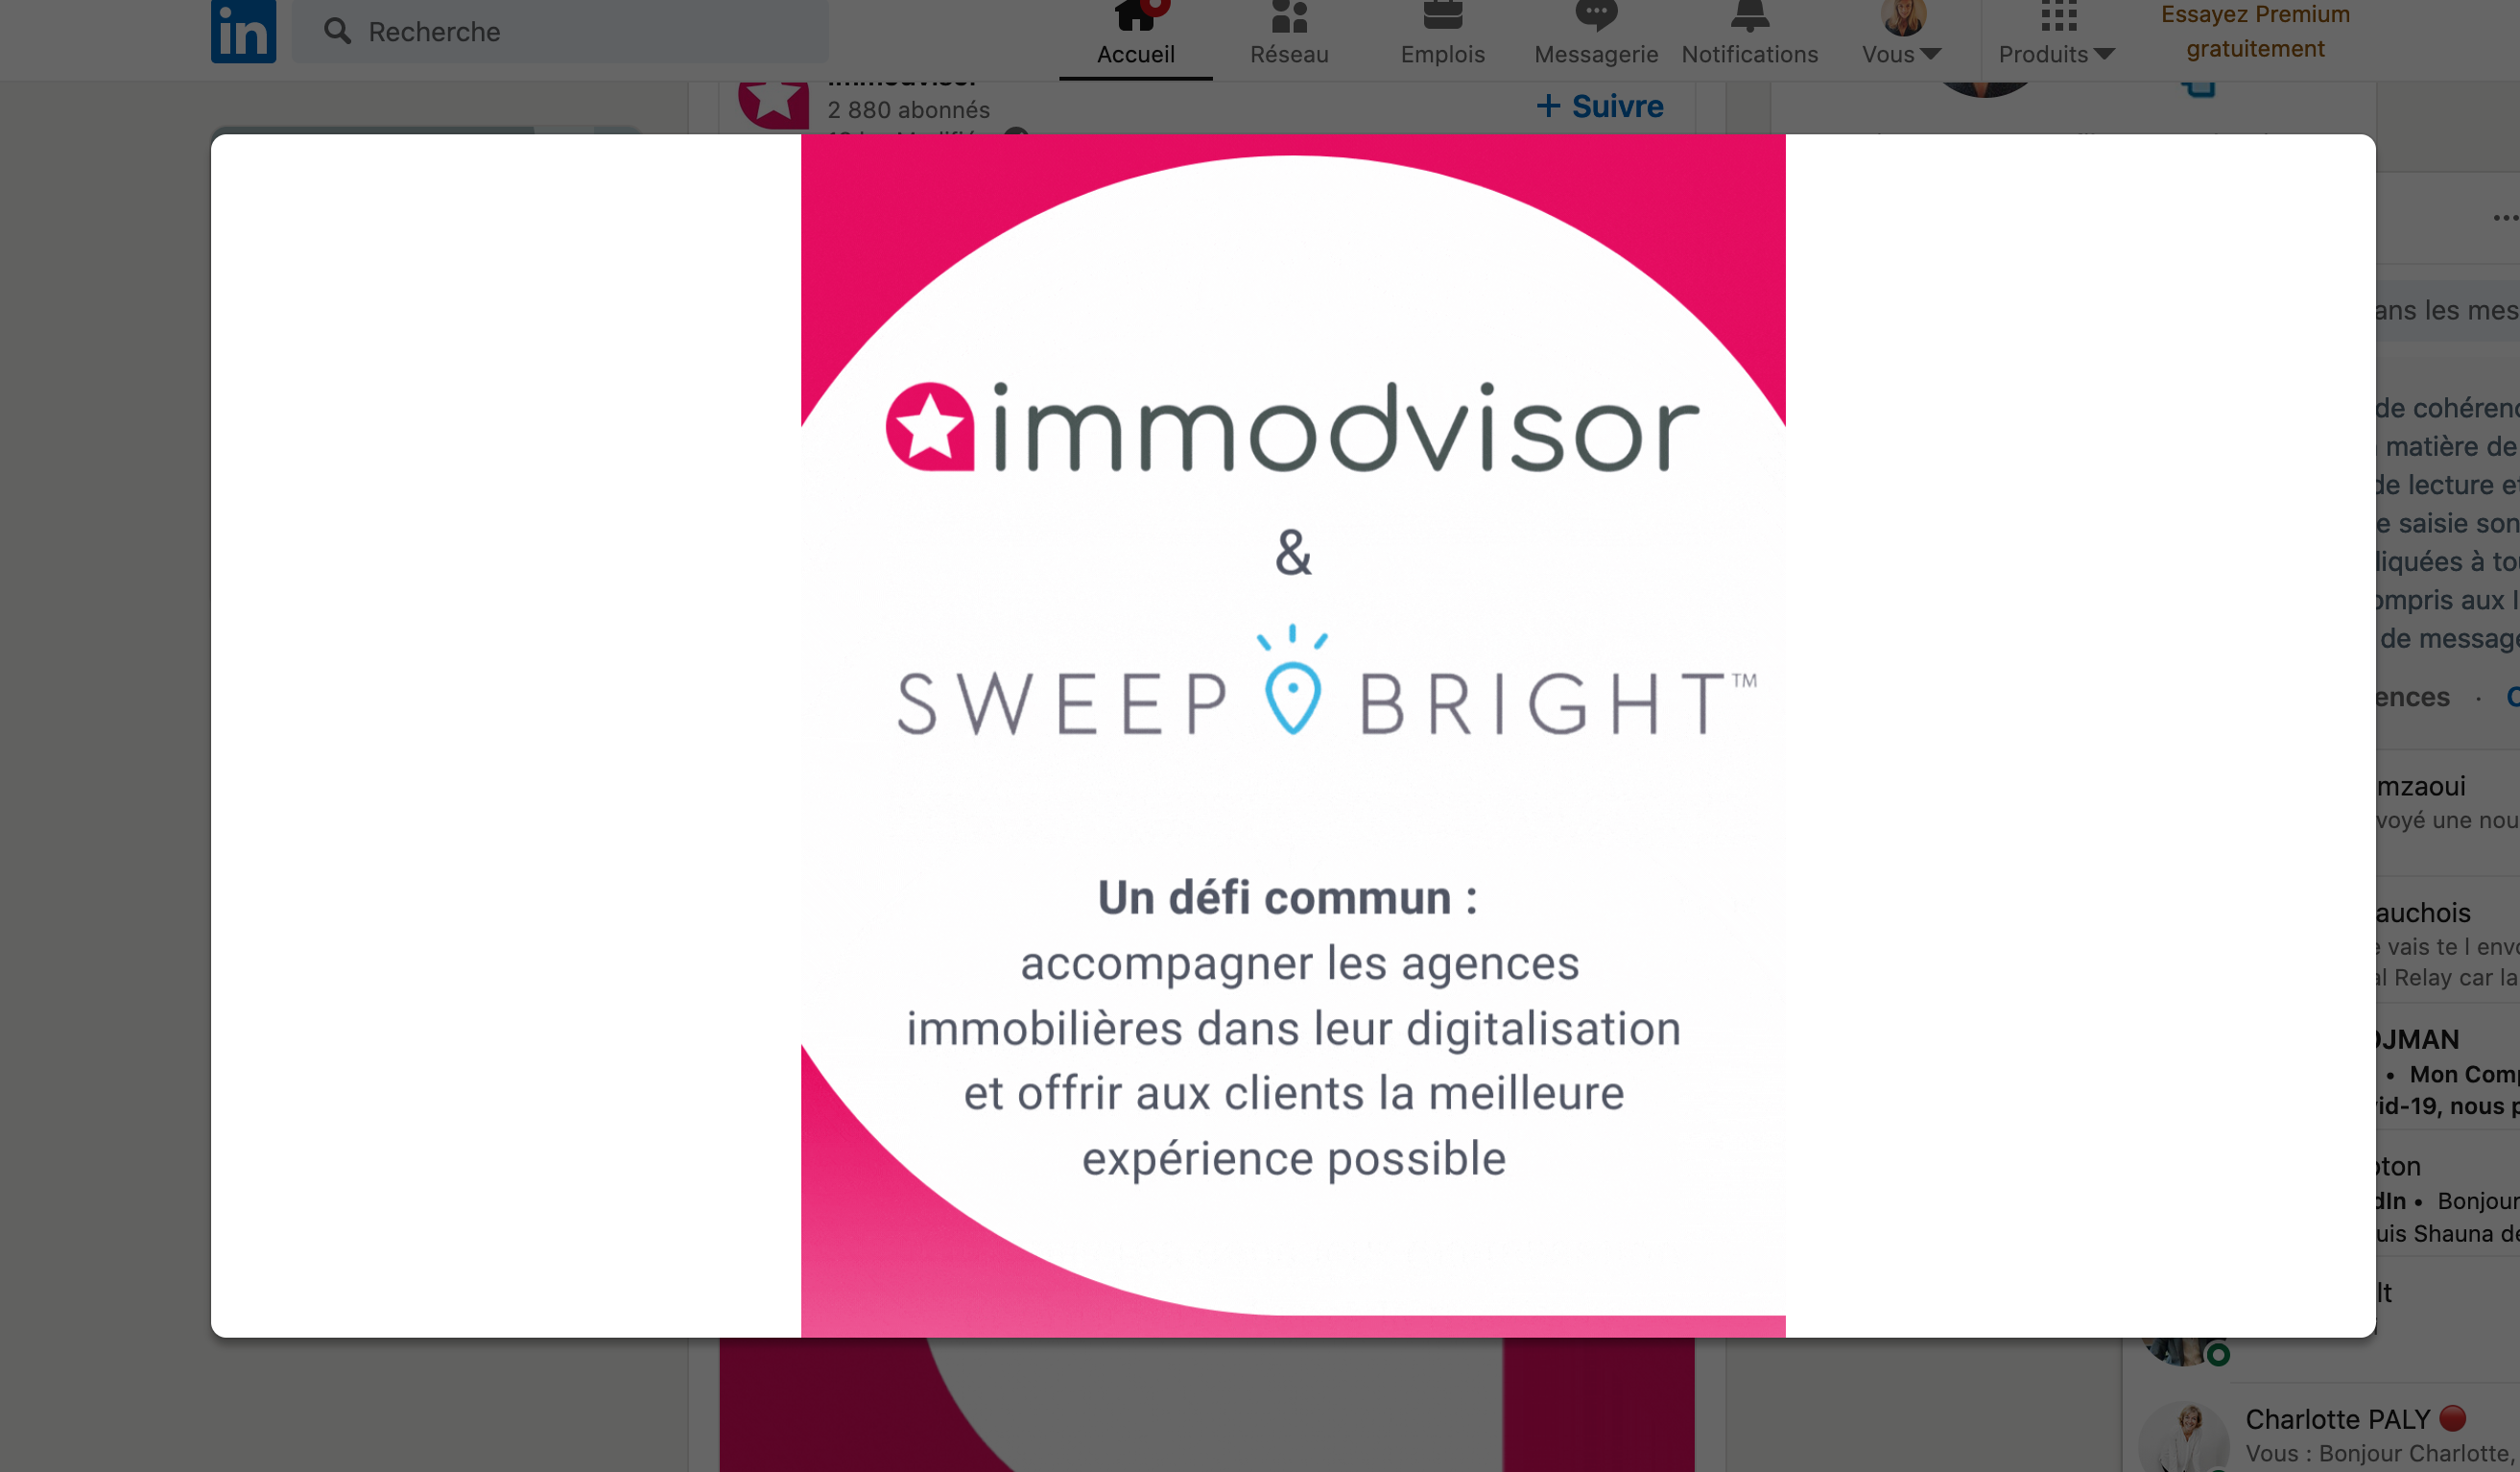 Sweepbright Immodvisor Partenariat Proptech Logiciel Transaction Avis Clients Immo2